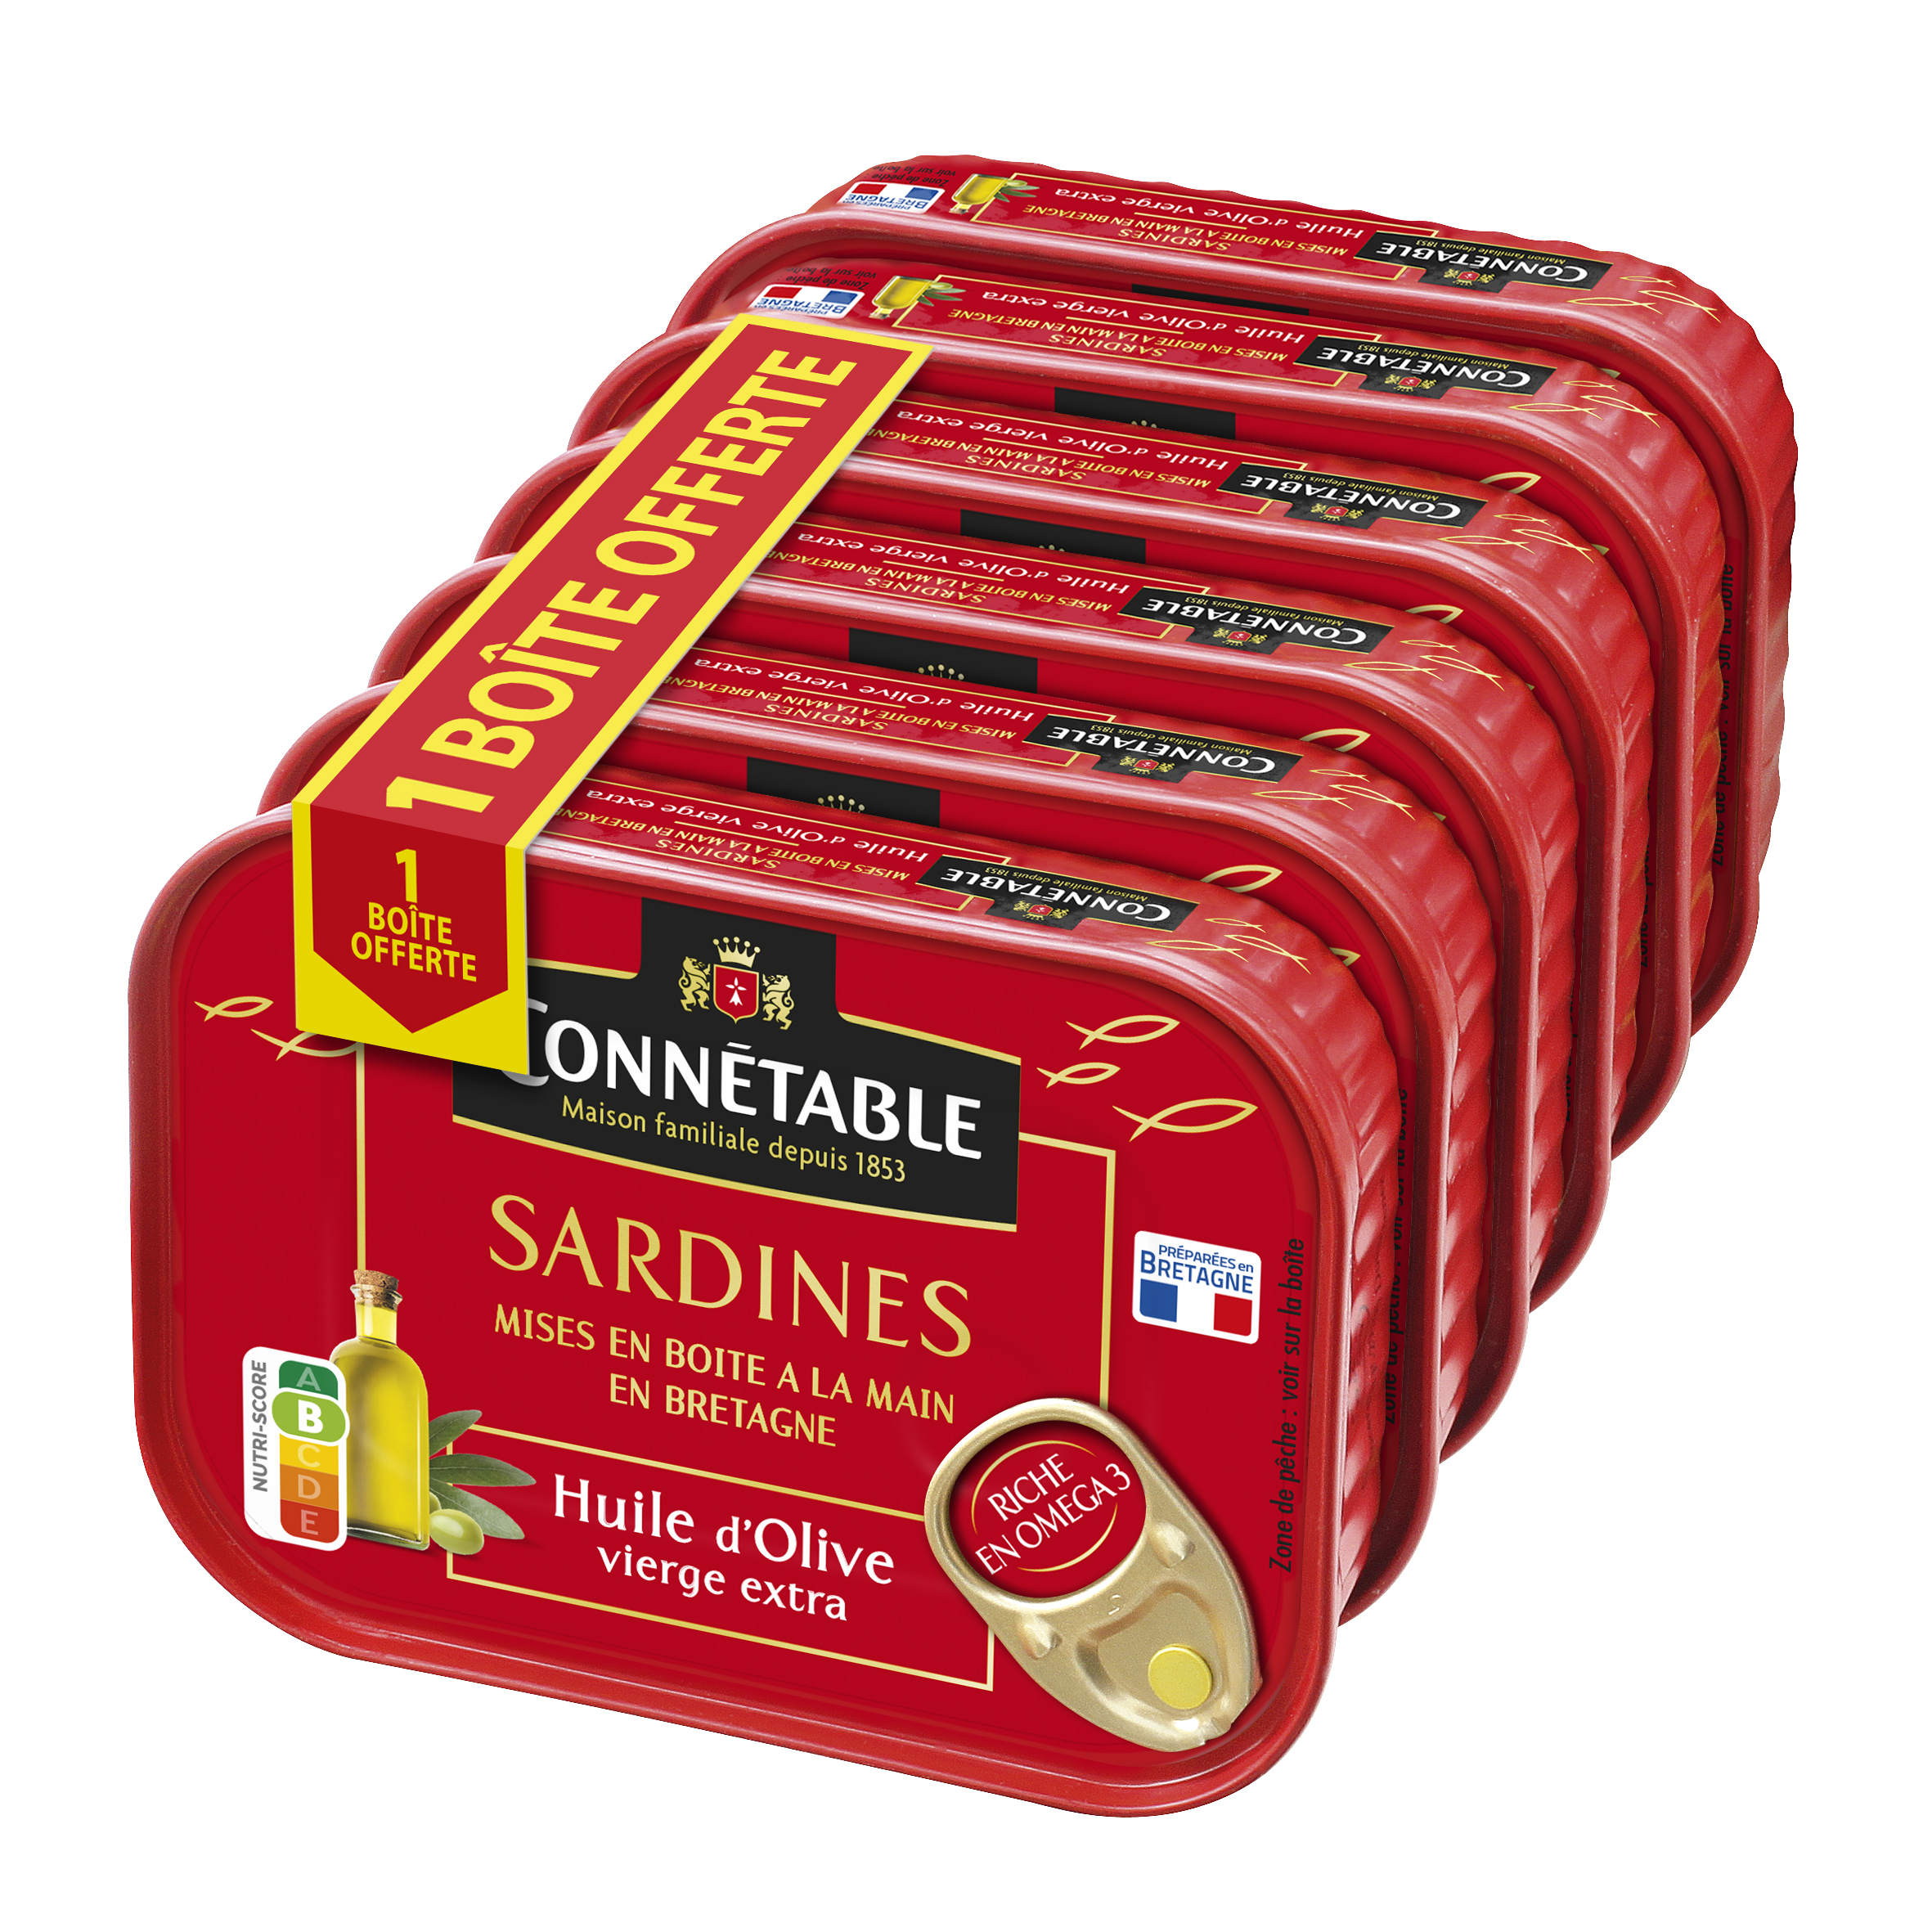 Coffret cadeau 5 boîtes de sardines de 115g, assortiment sardines